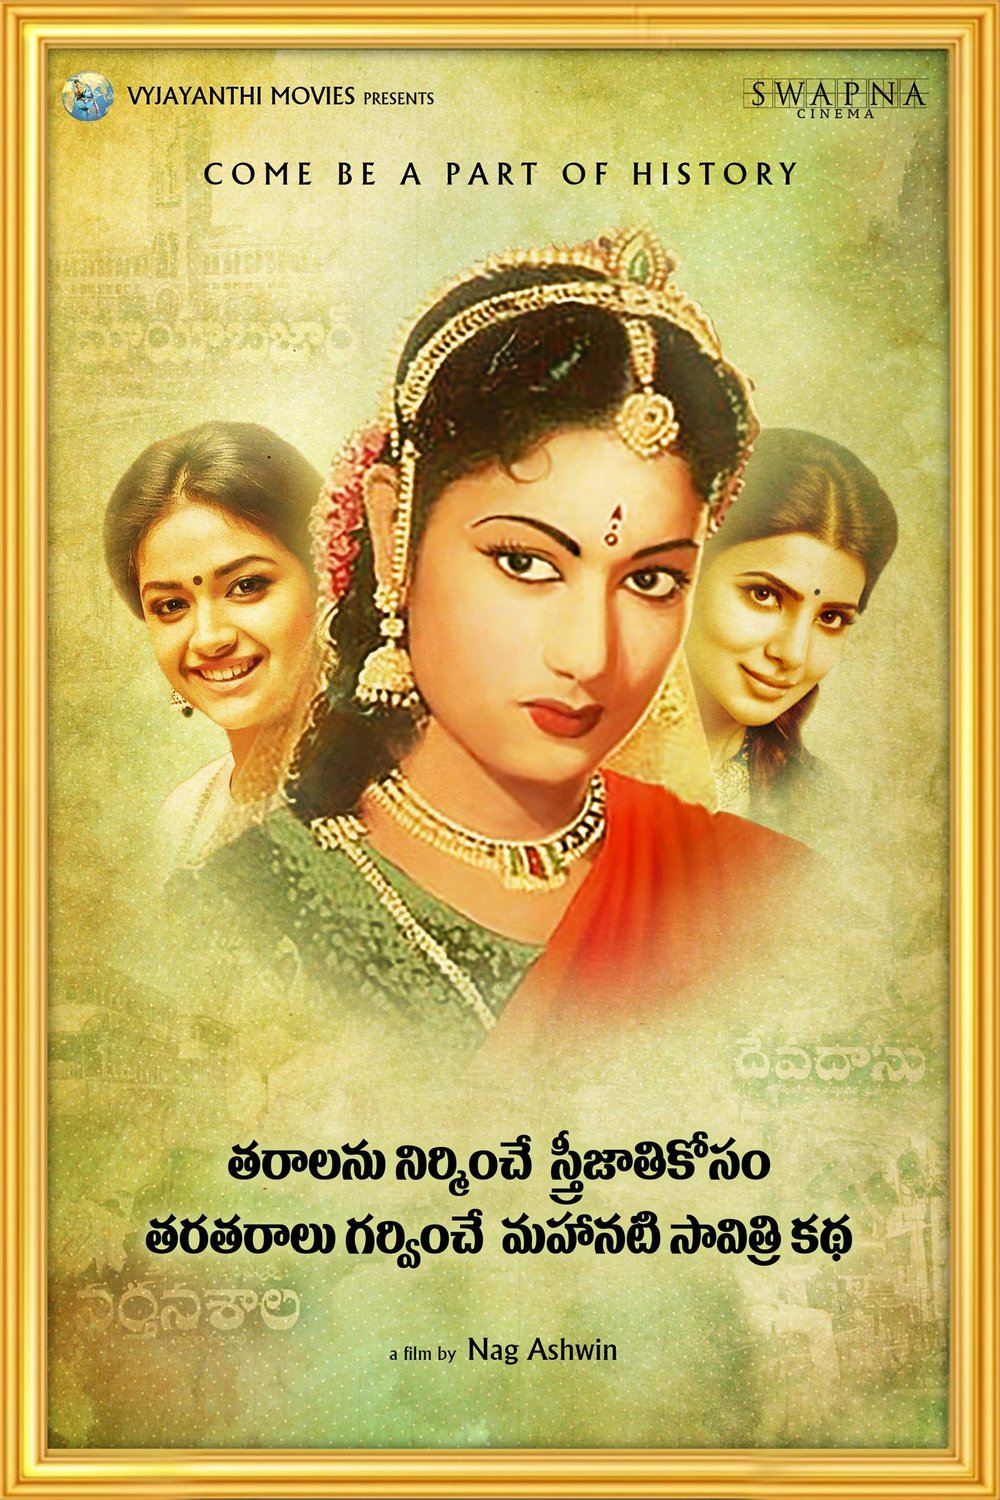 L'affiche originale du film Mahanati en Telugu